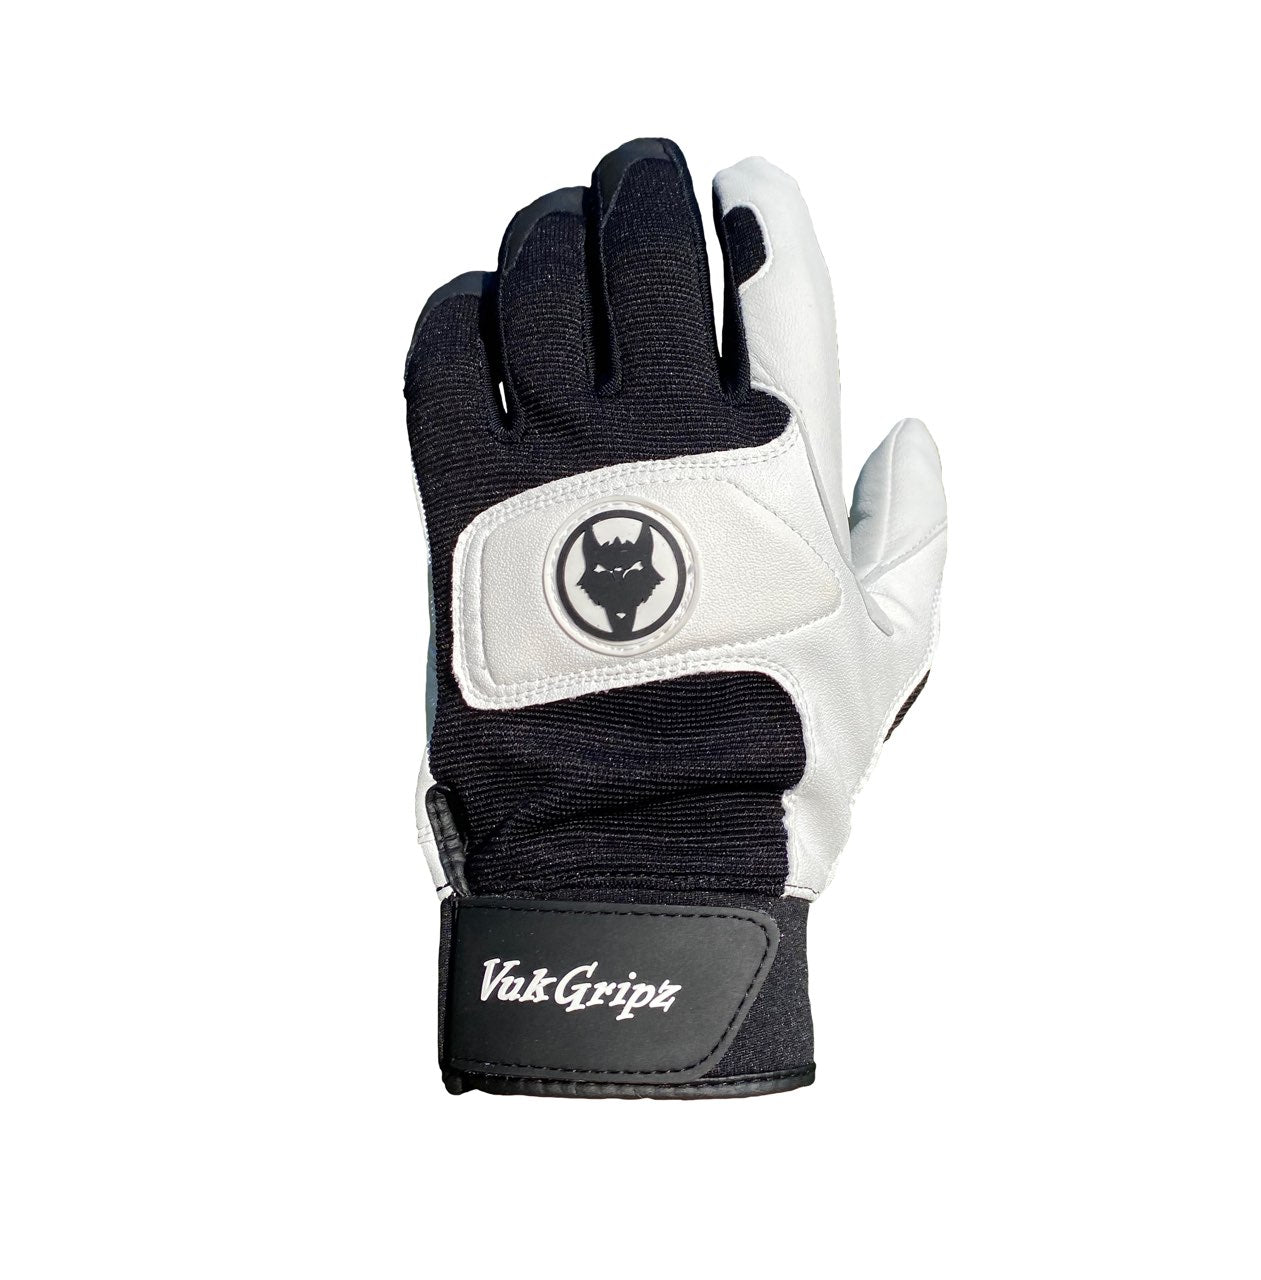 Select 2.0 Black and White Baseball and Softball Batting Gloves